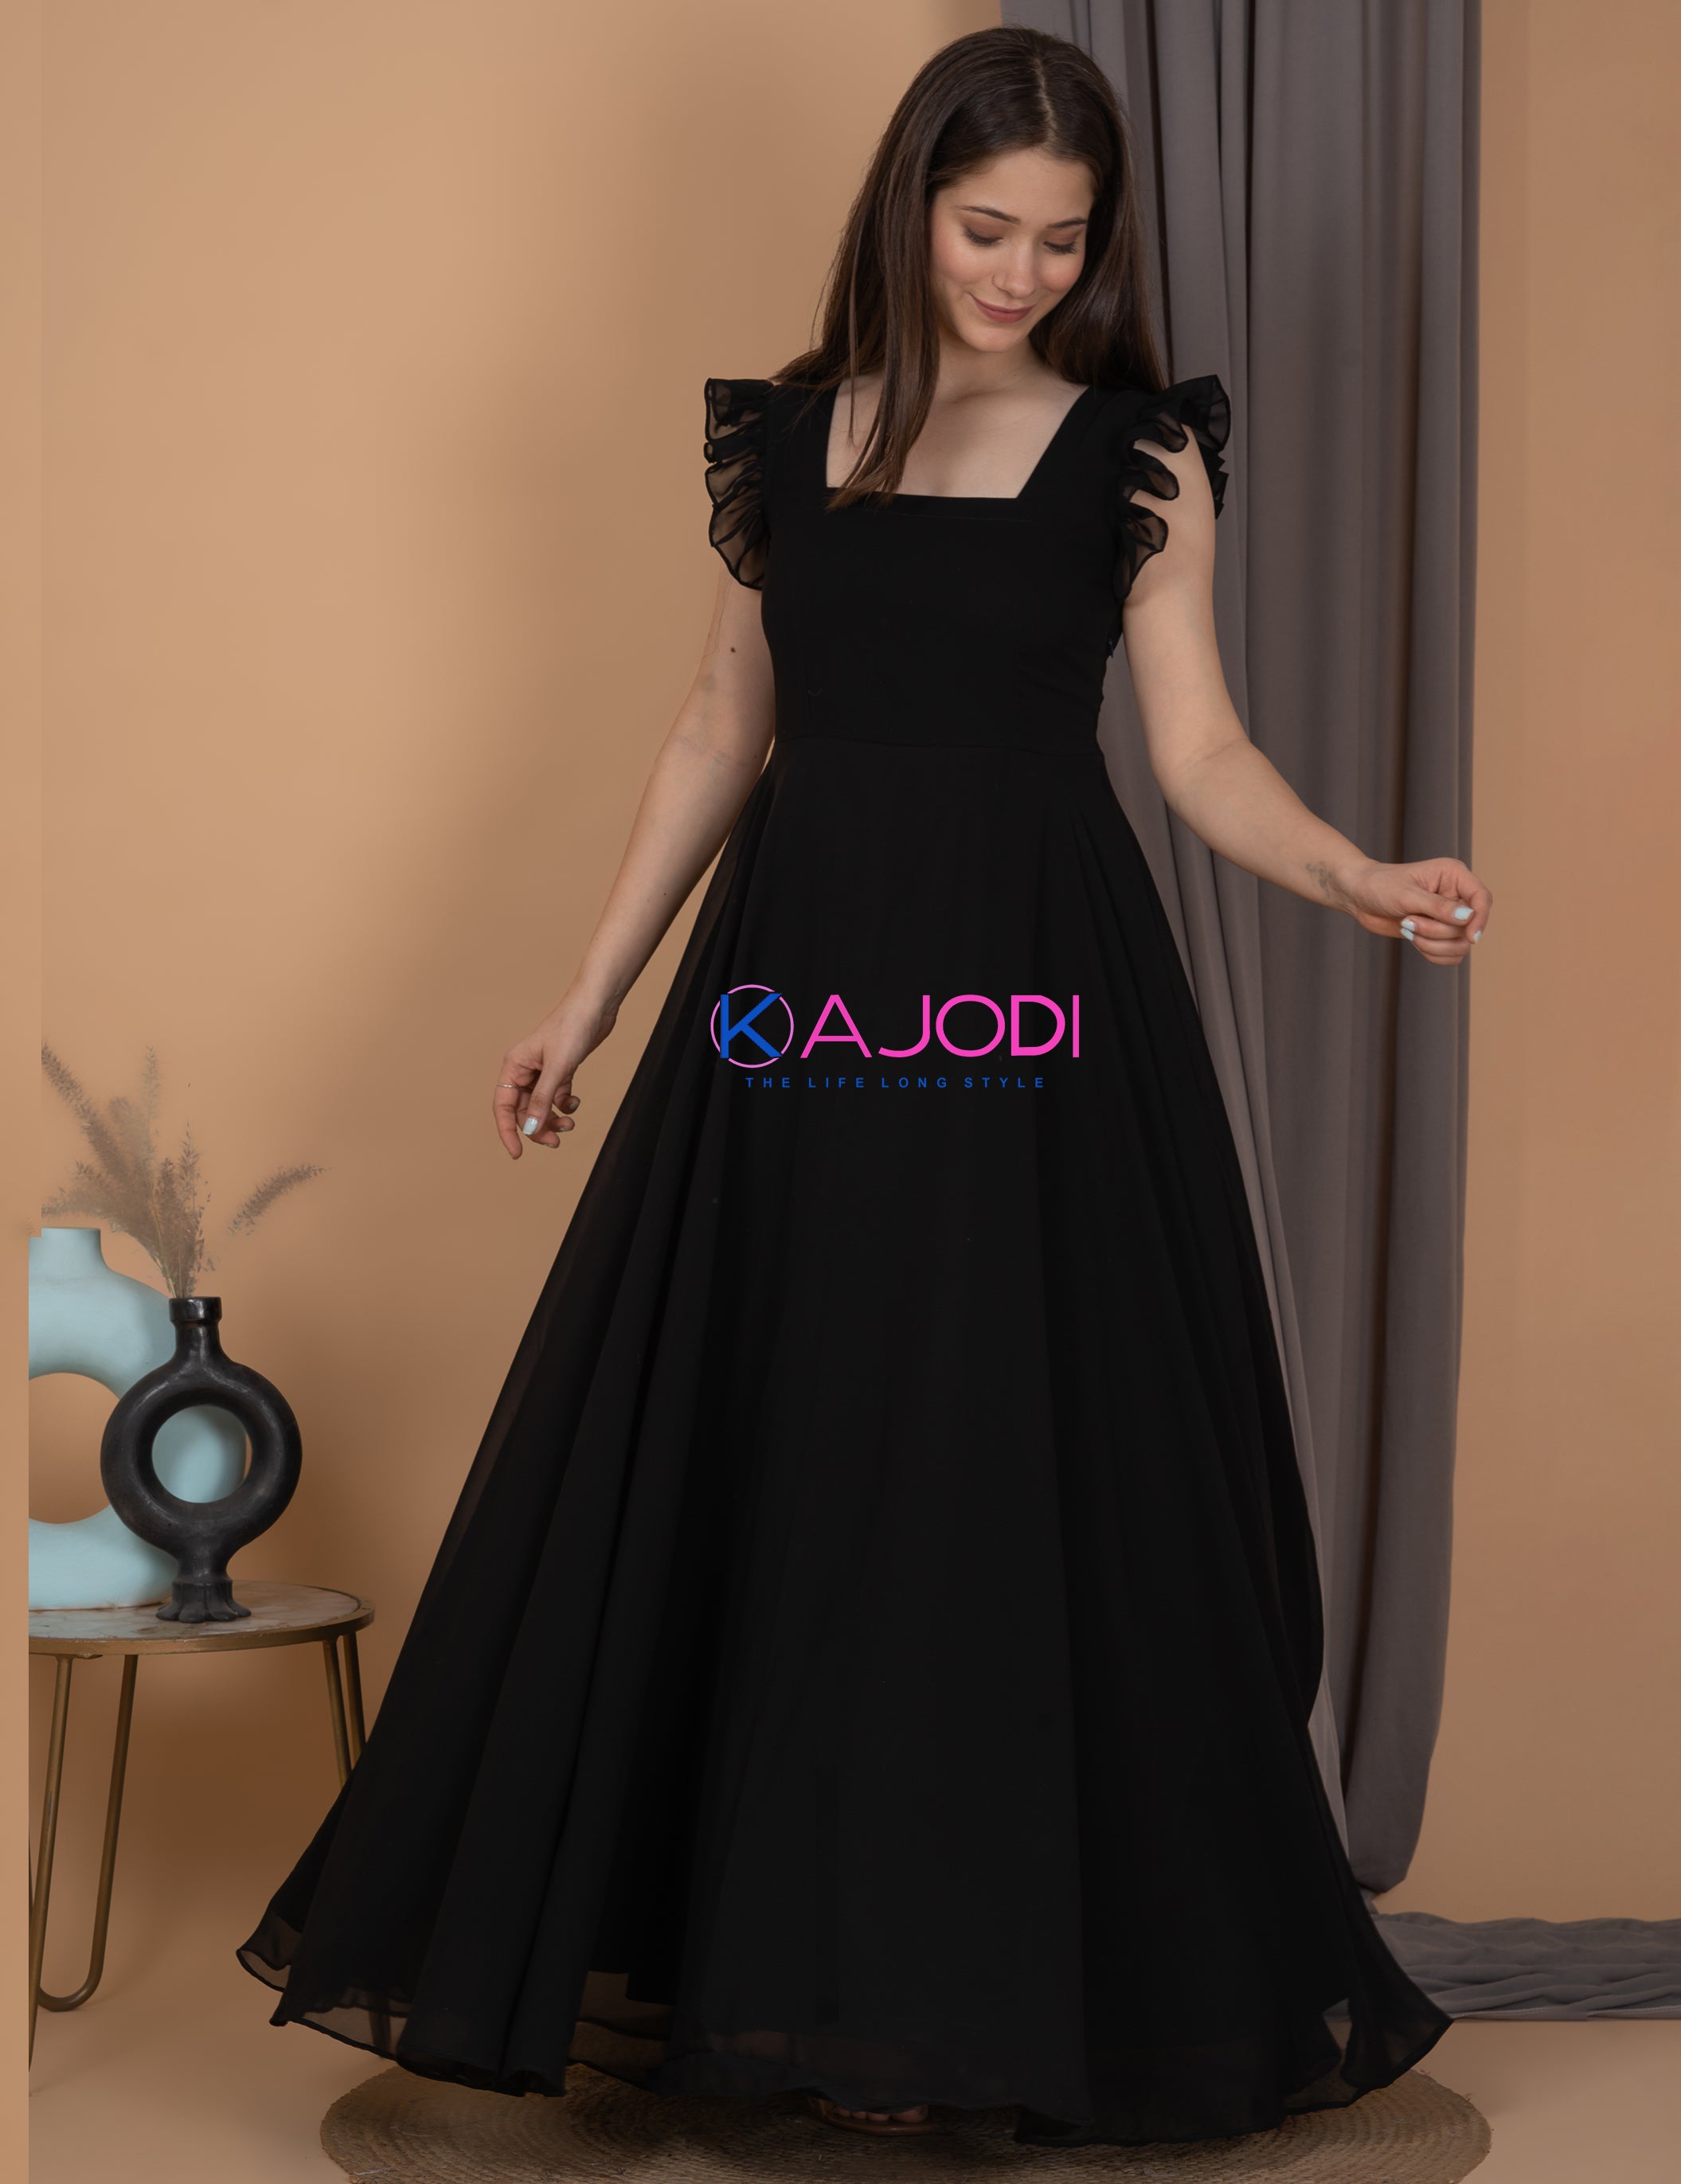 Modest Evening Gowns - Modest Party Dresses - Shimmi Dresses